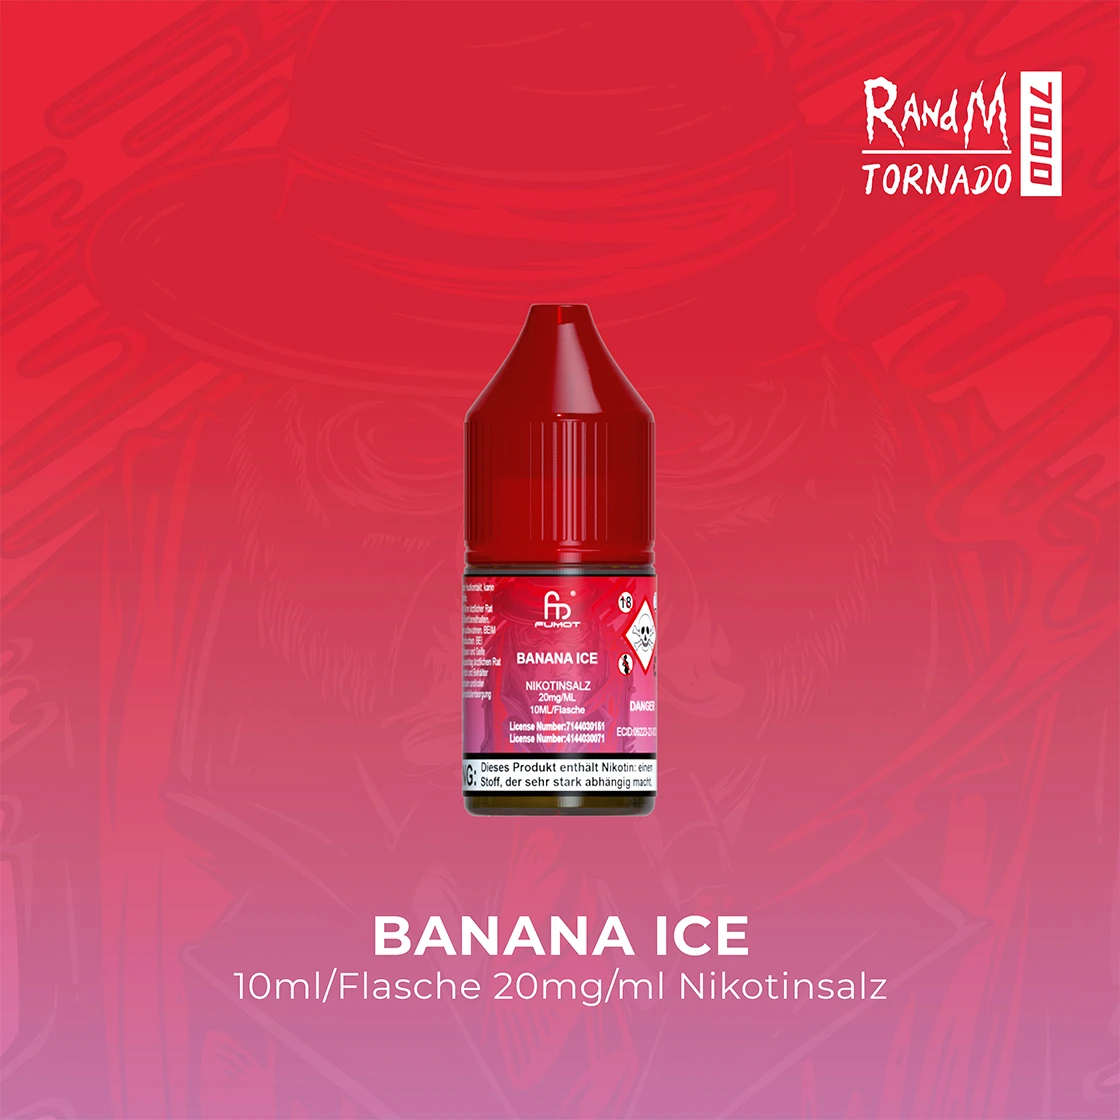 RandM Tornado 7000 Banana Ice E-Liquid Nikotinsalz 20 mg | Vape Liquids 1